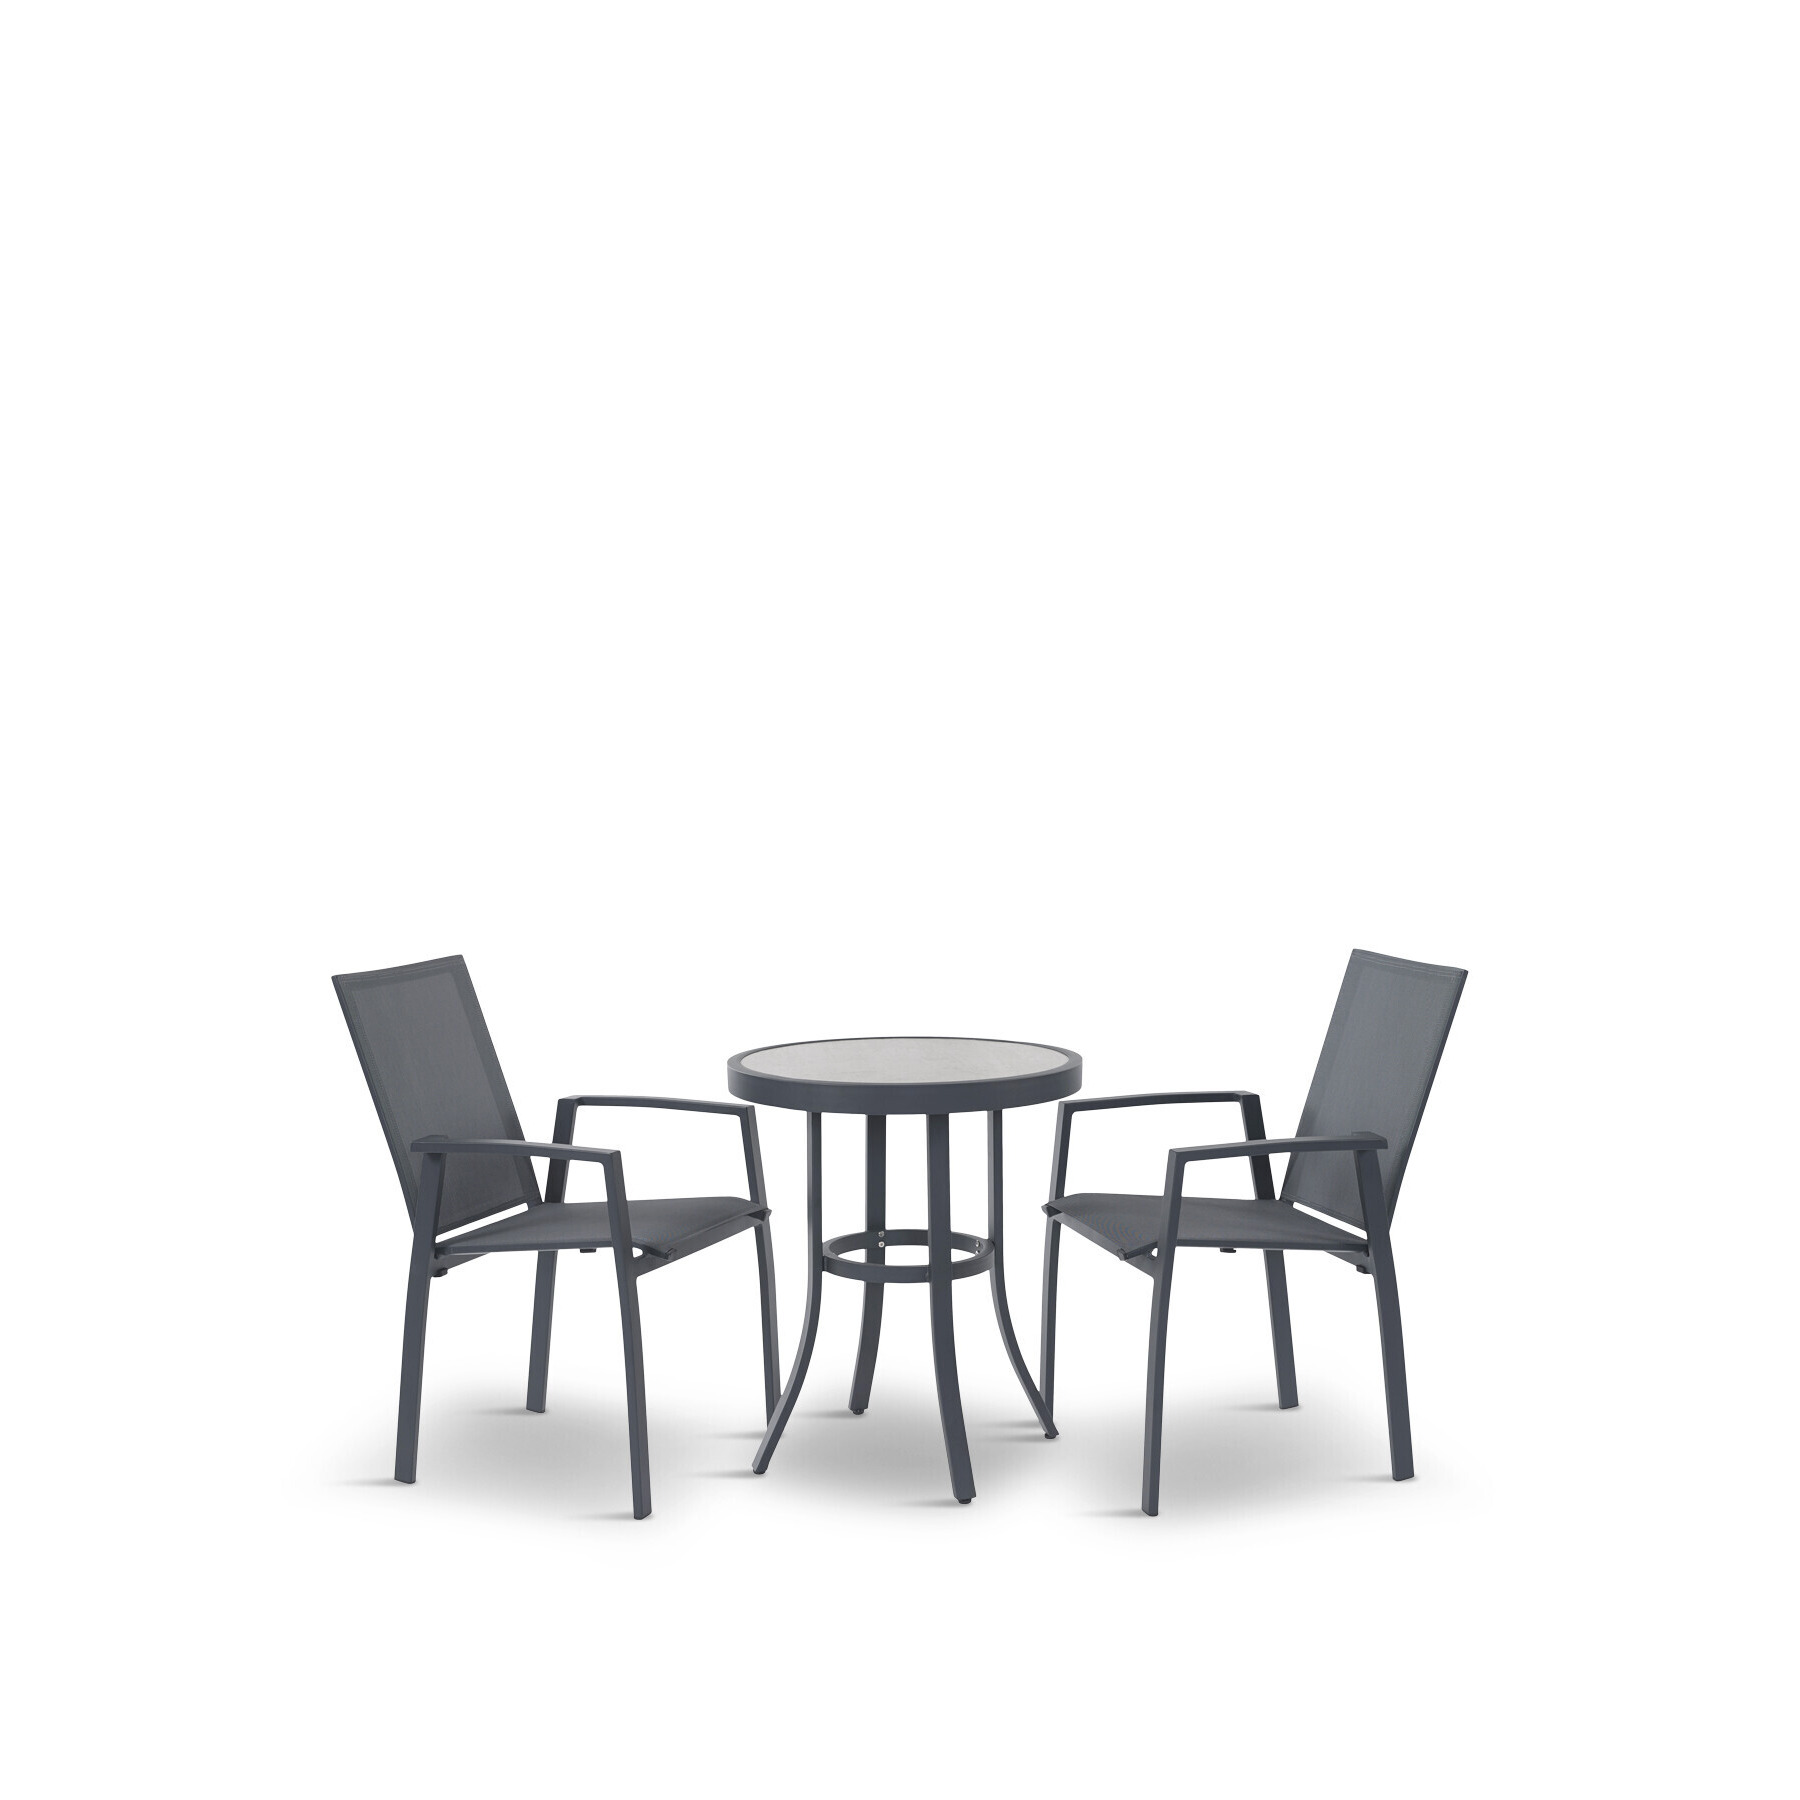 Bramblecrest Seville Bistro Set with Round Bistro Table and 2 Arm Chairs Grey - image 1